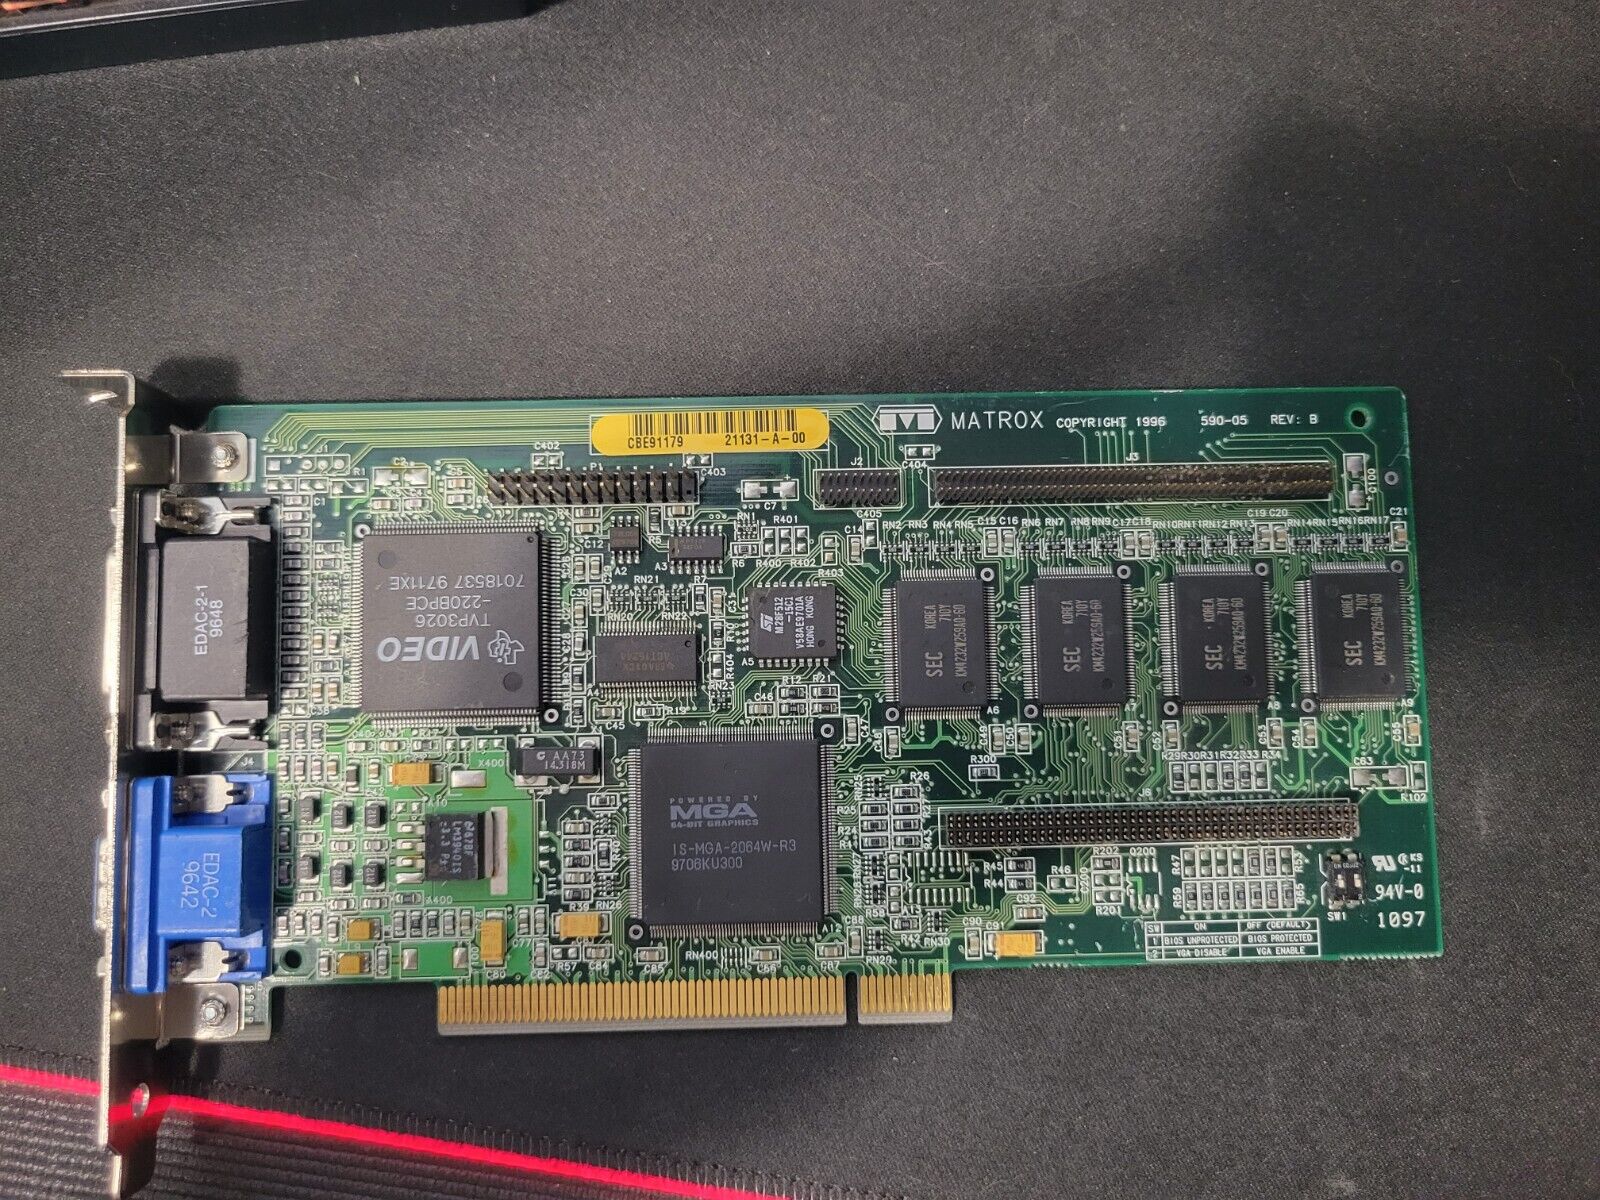 MATROX MGA-MIL/4G - 4MB PCI VIDEO CARD, 590-05 REV B (VINTAGE)